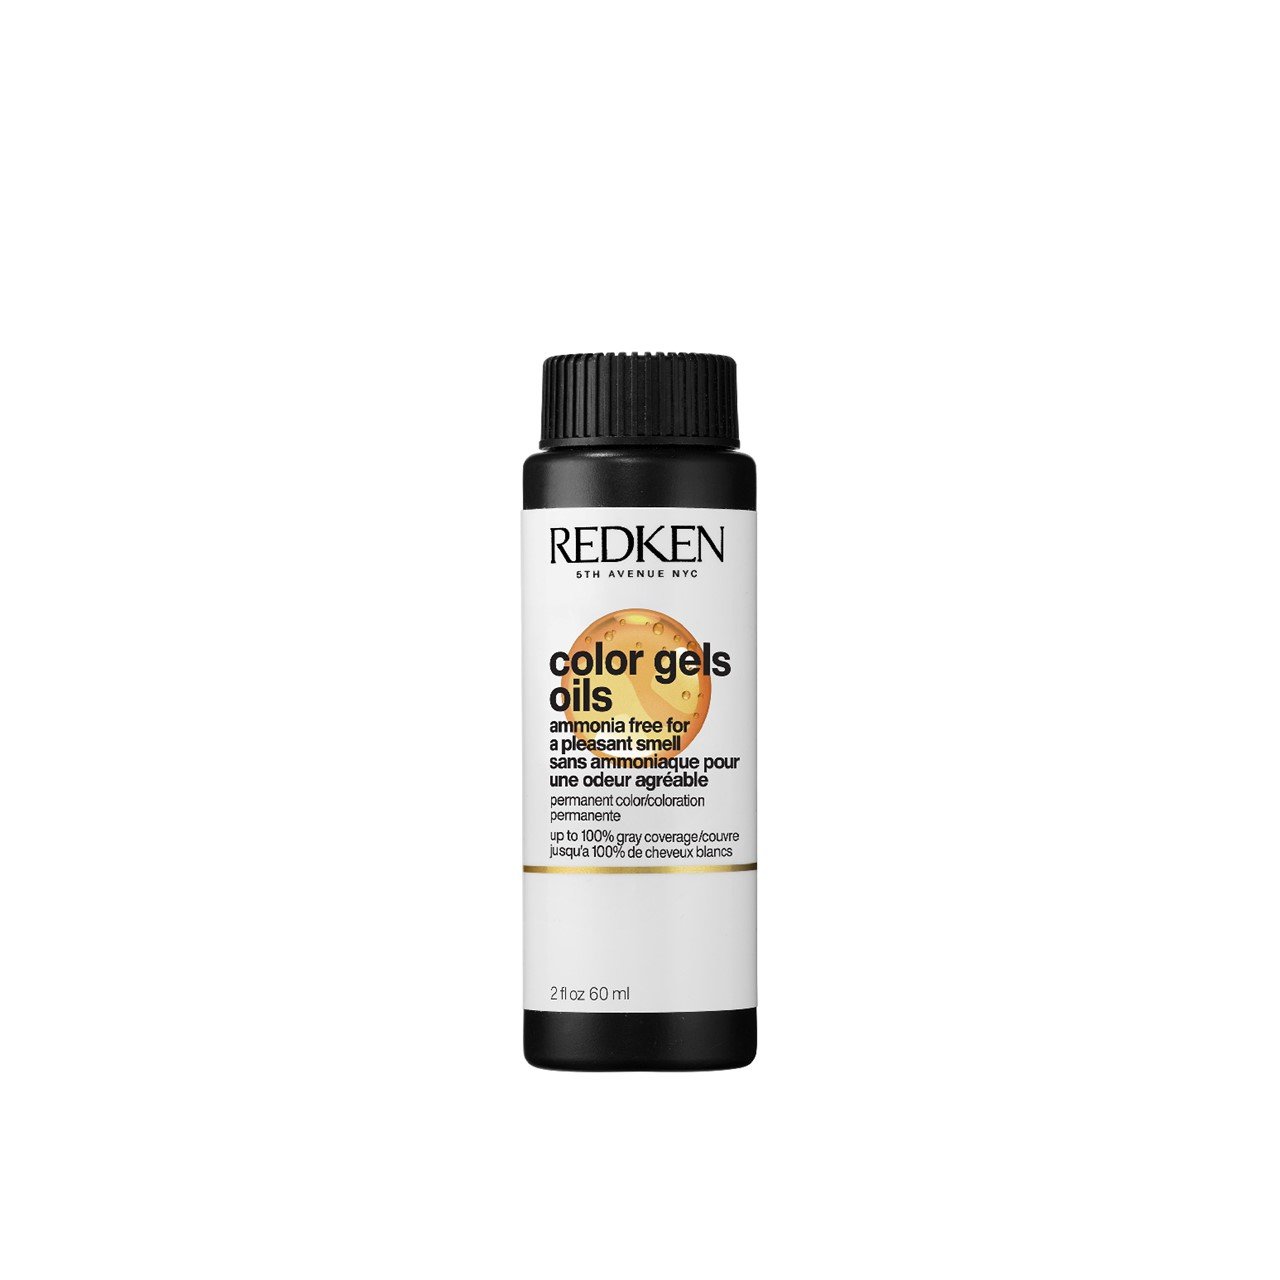 Redken Color Gels Oils 4NW Maple Permanent Hair Dye 60ml (2.03 fl oz)